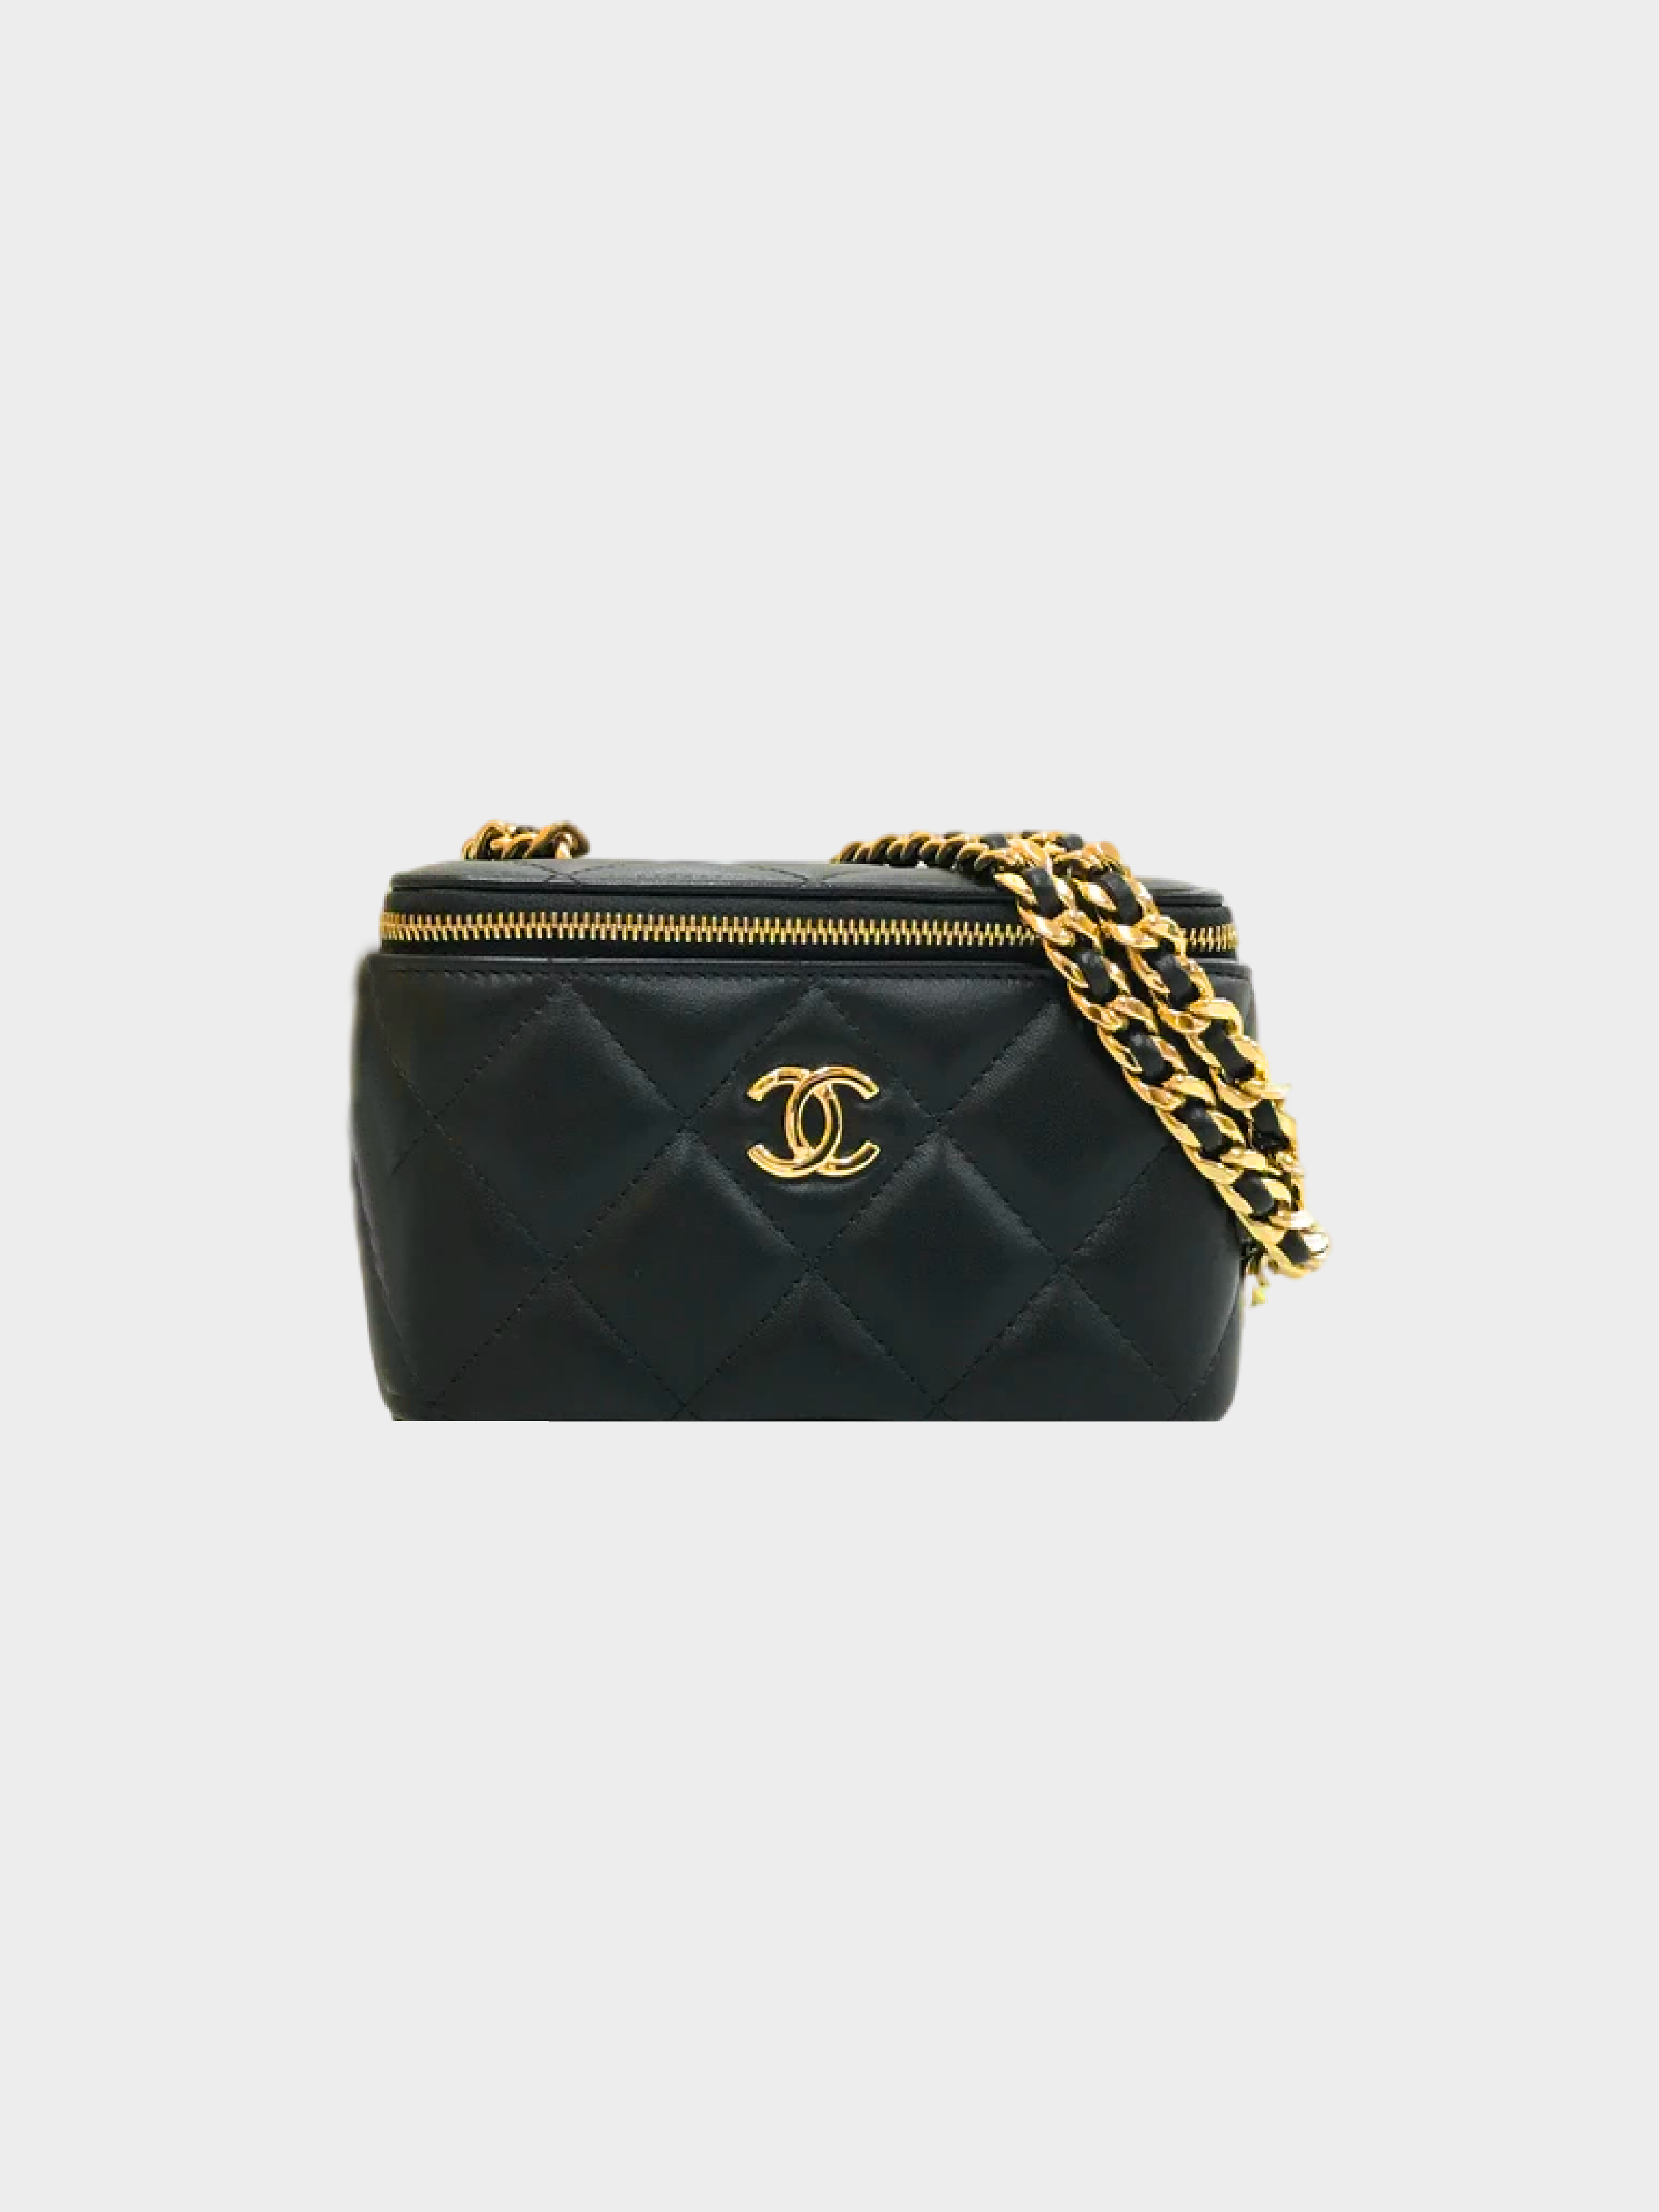 Chanel Classic Vanity Rectangular Top Handle With Chain Black